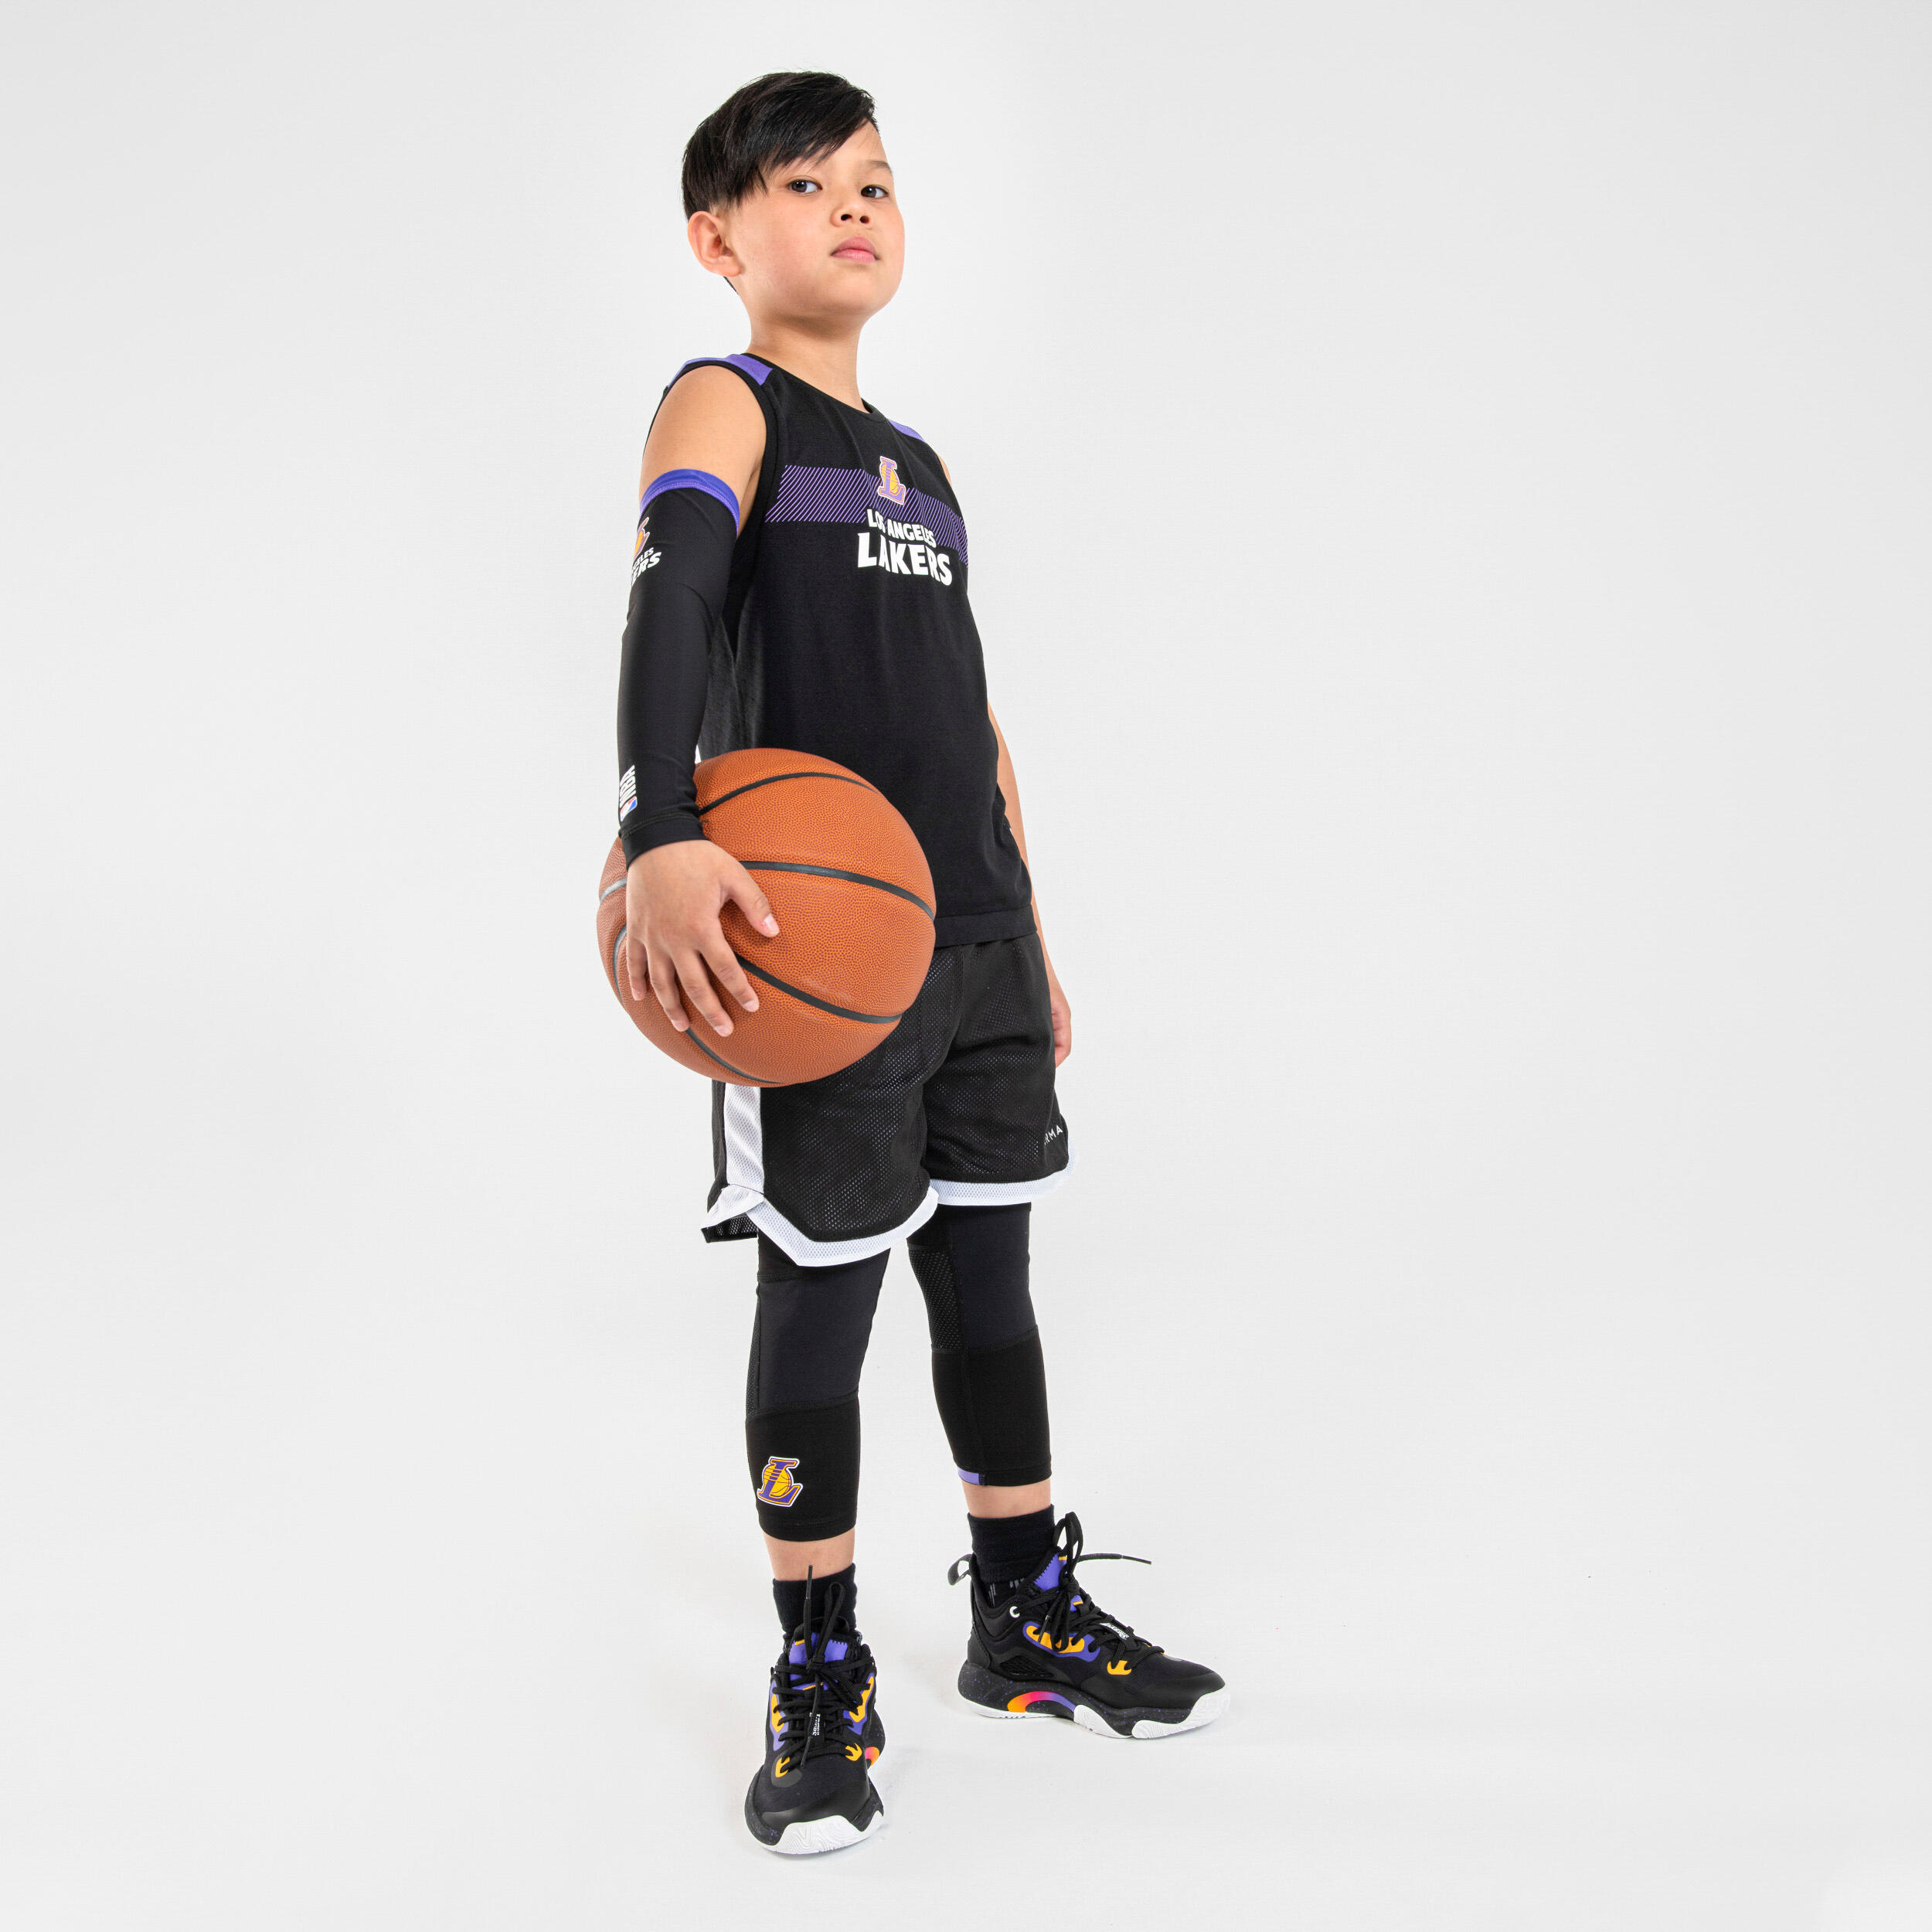 Kids' Sleeveless Basketball Base Layer Jersey UT500 - NBA Los Angeles Lakers/Black 7/8